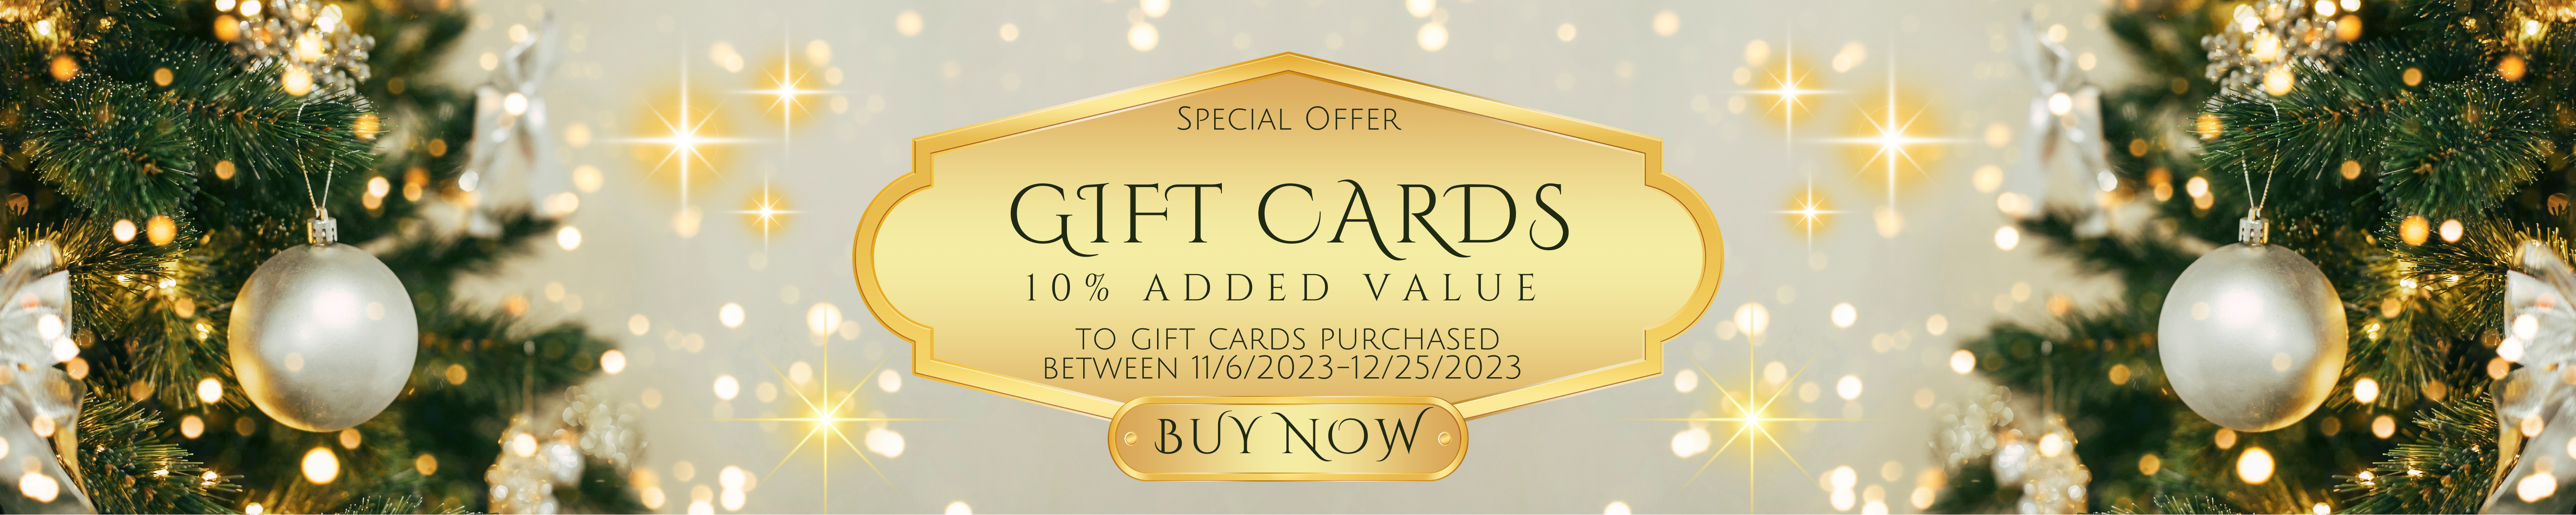 Gift-Card-Banner-Website-2